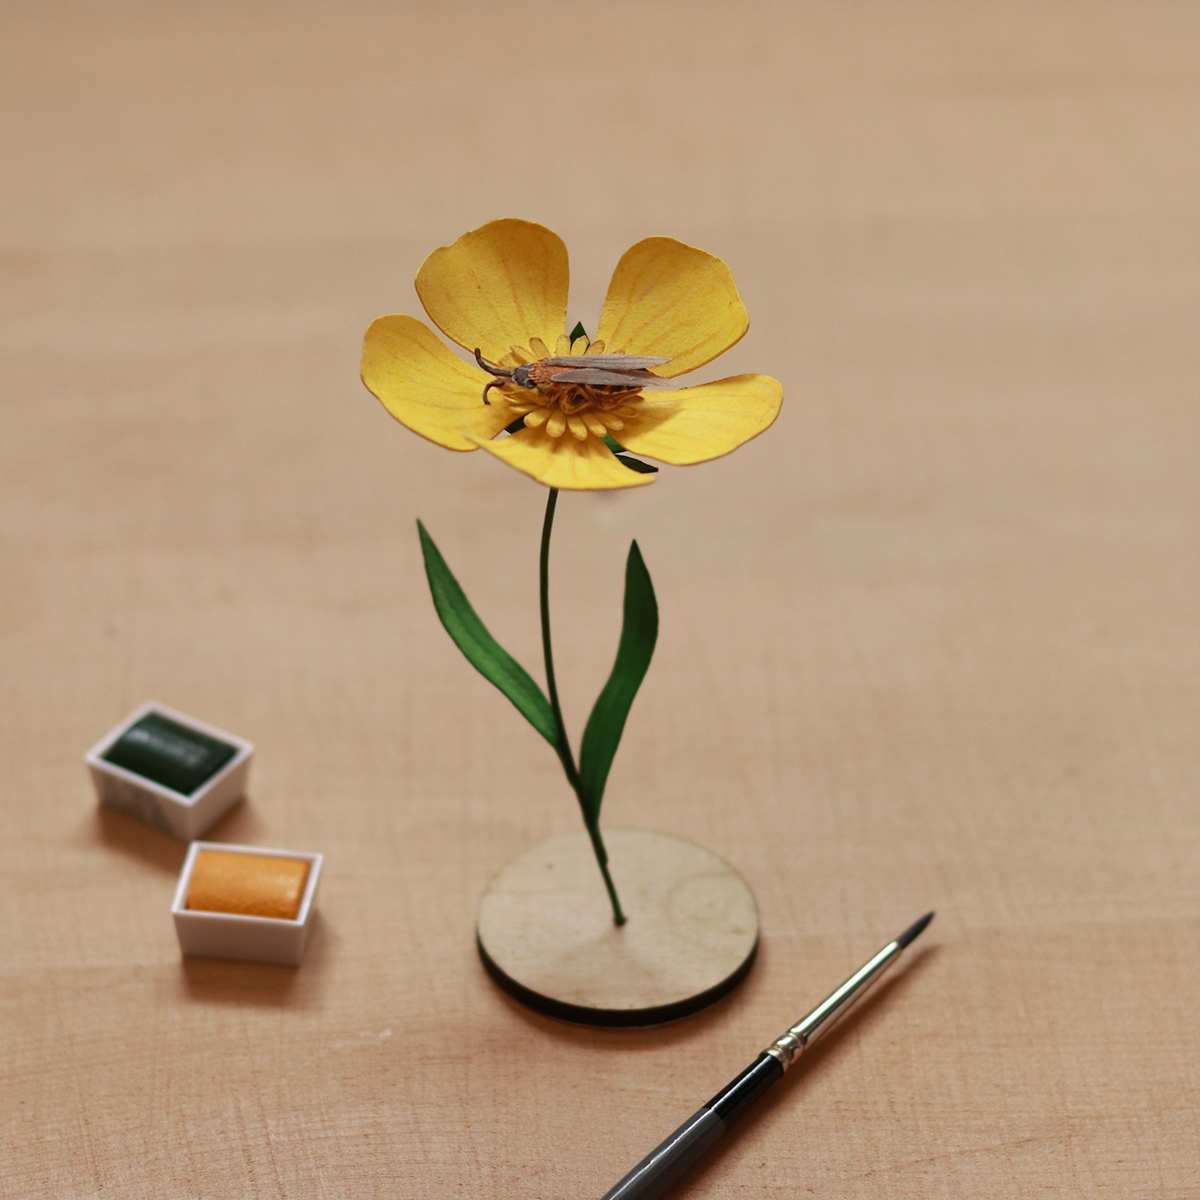 art bees birds butterfly Flowers Miniature paper art paper cut watercolor wildlife art